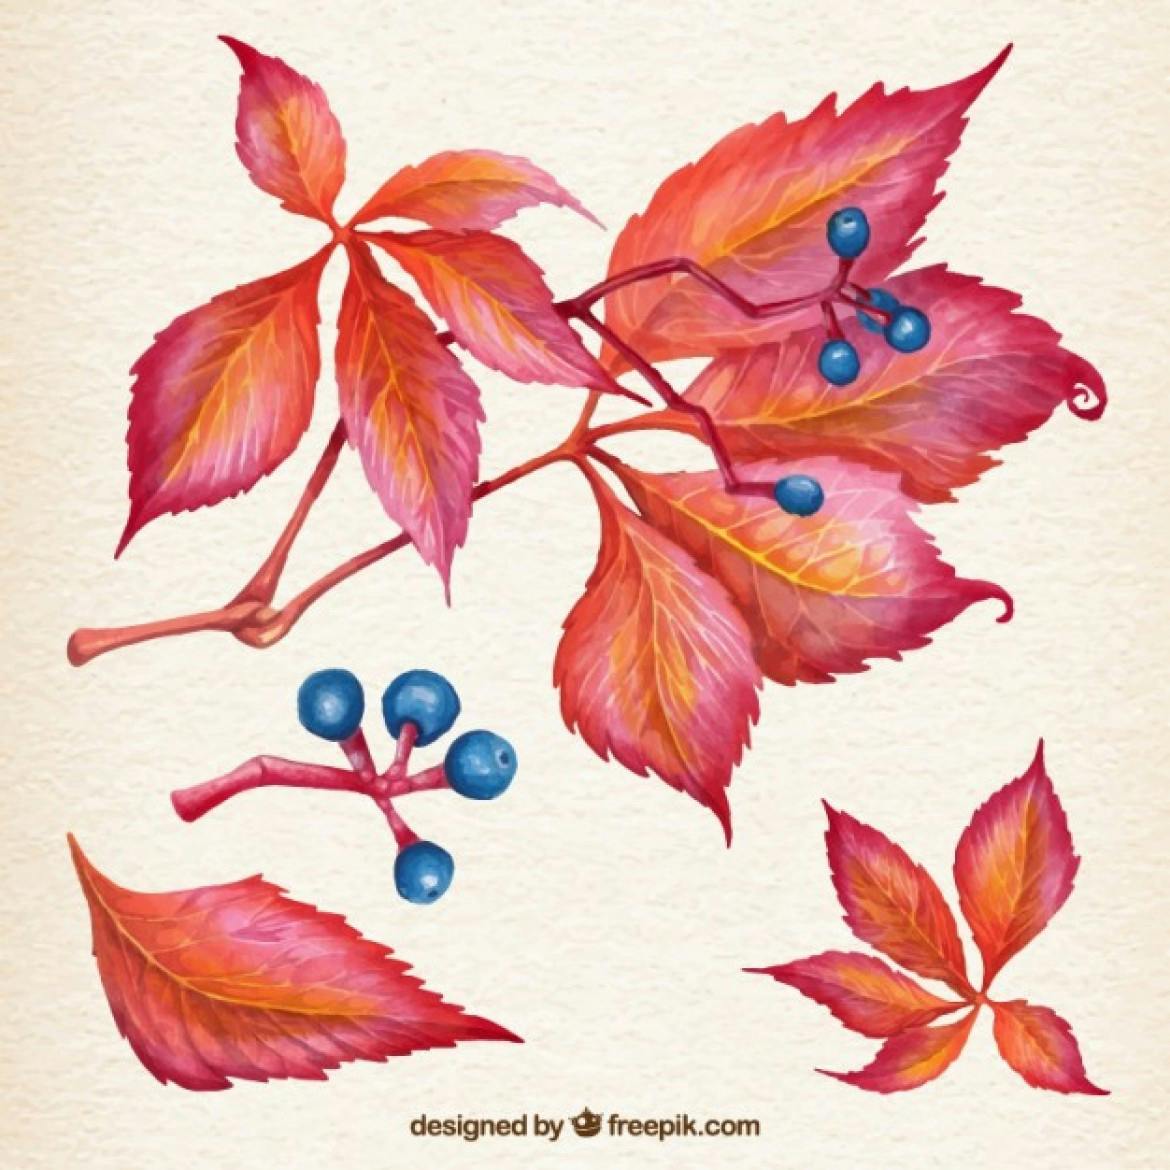 wpid-natural-autumn-leaves_23-2147520419-1170x1170